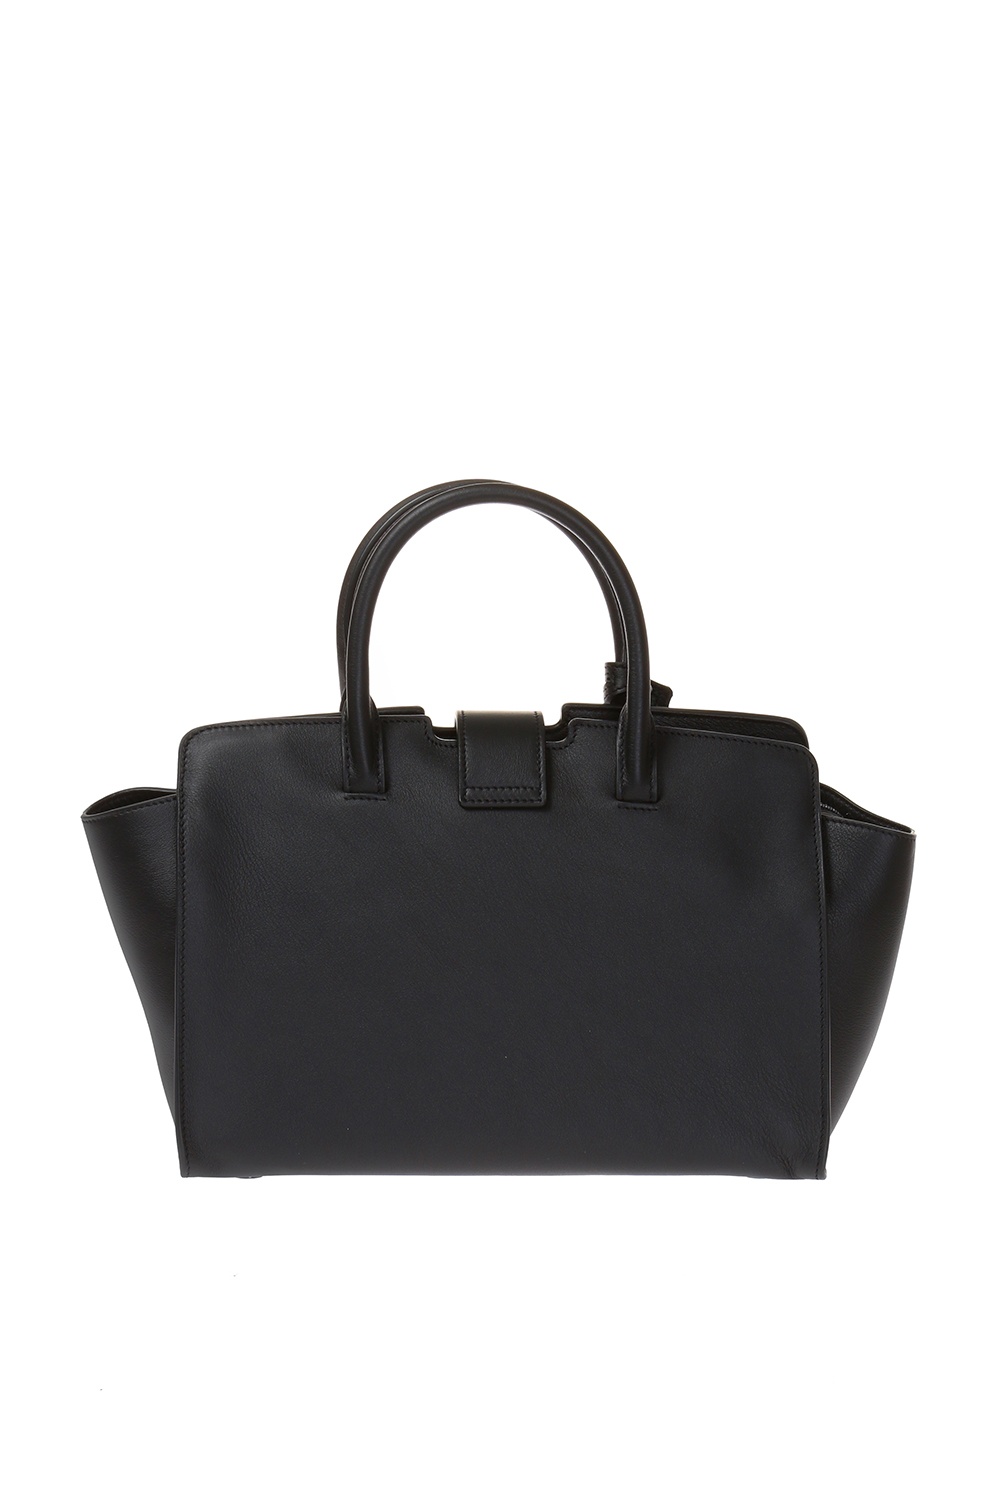 Céline Trio bag in black leather - DOWNTOWN UPTOWN Genève